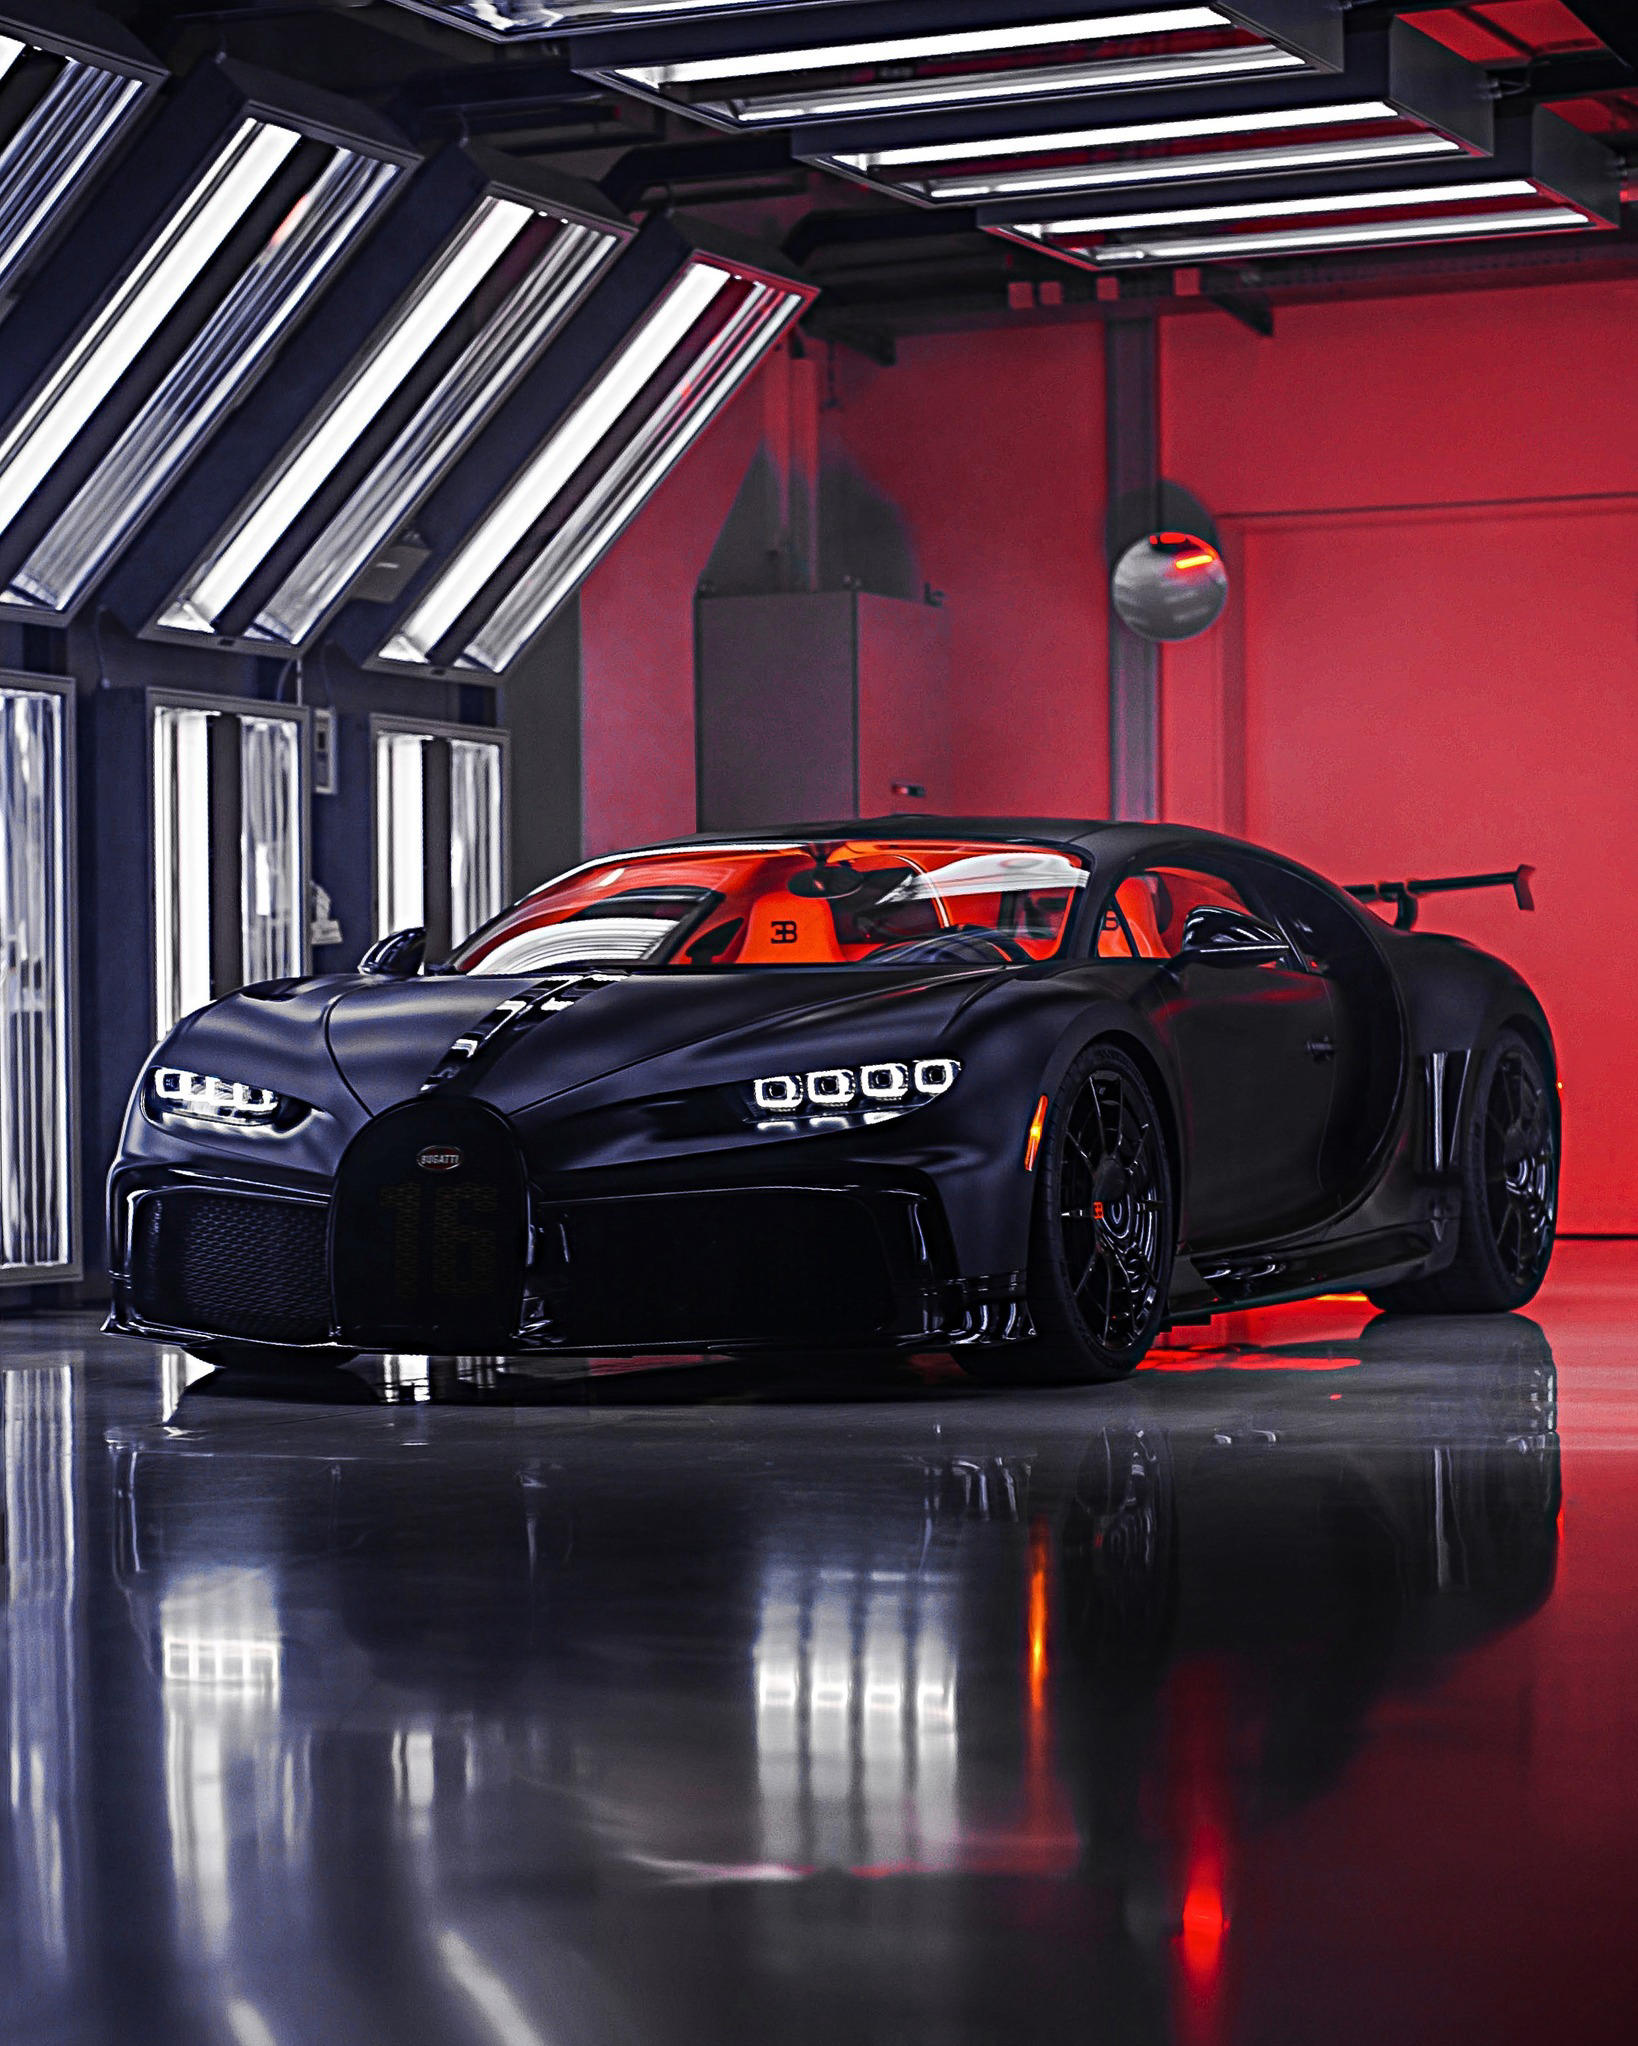 BUGATTI - Black carbon exterior meets a tangerine interior for this BUGATTI CHIRON Pur Sport